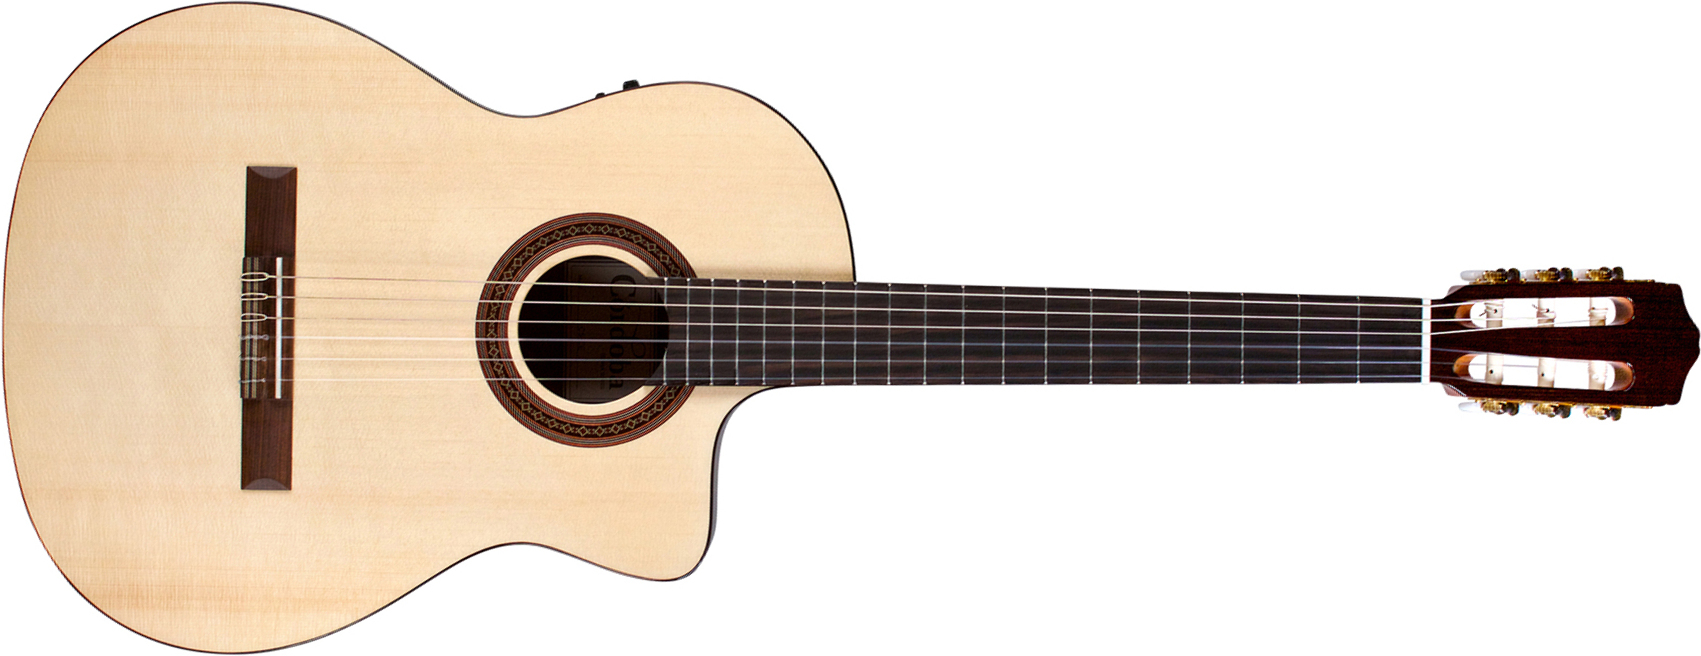 Cordoba C5-ce Sp Iberia 4/4 Cw Epicea Acajou Rw - Natural - Classical guitar 4/4 size - Main picture